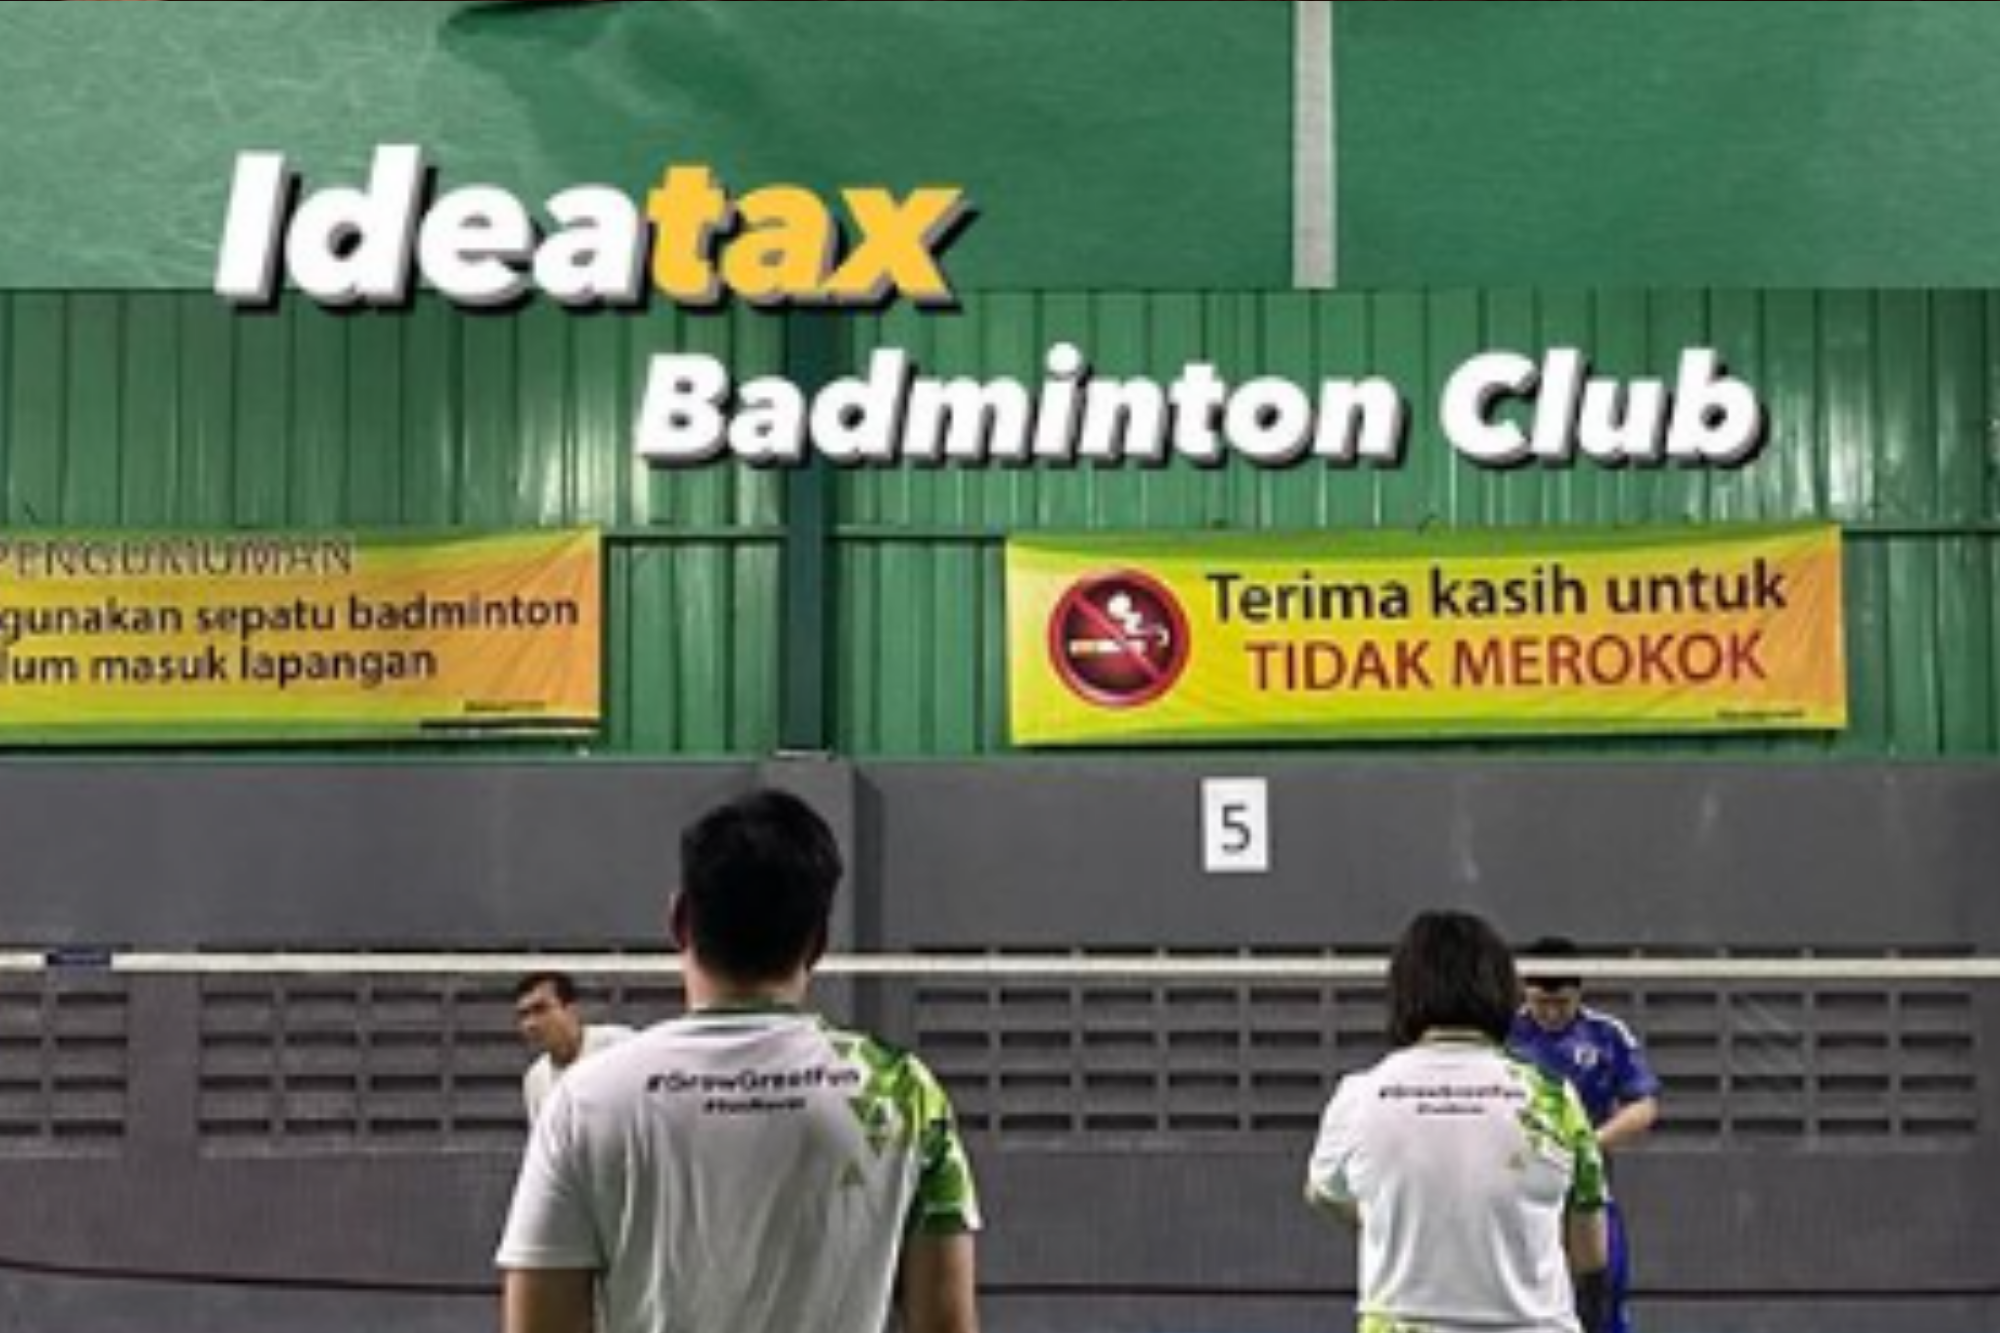 Klub Badminton Ideatax